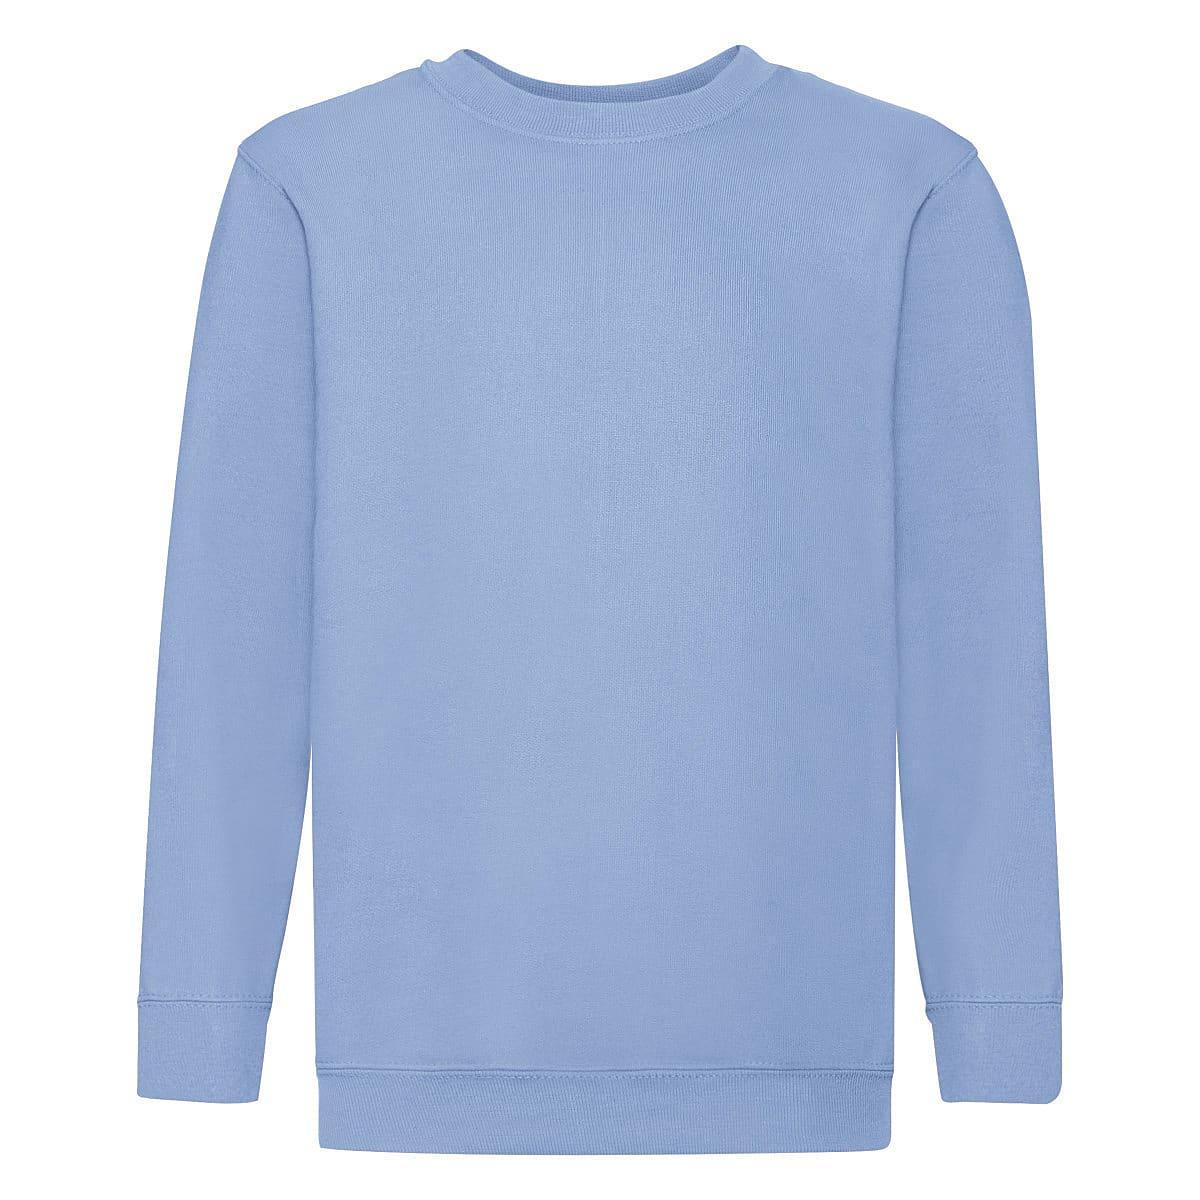 Fruit Of The Loom Childrens Set in Sleeve Sweatshirt in Sky Blue (Product Code: 62041)